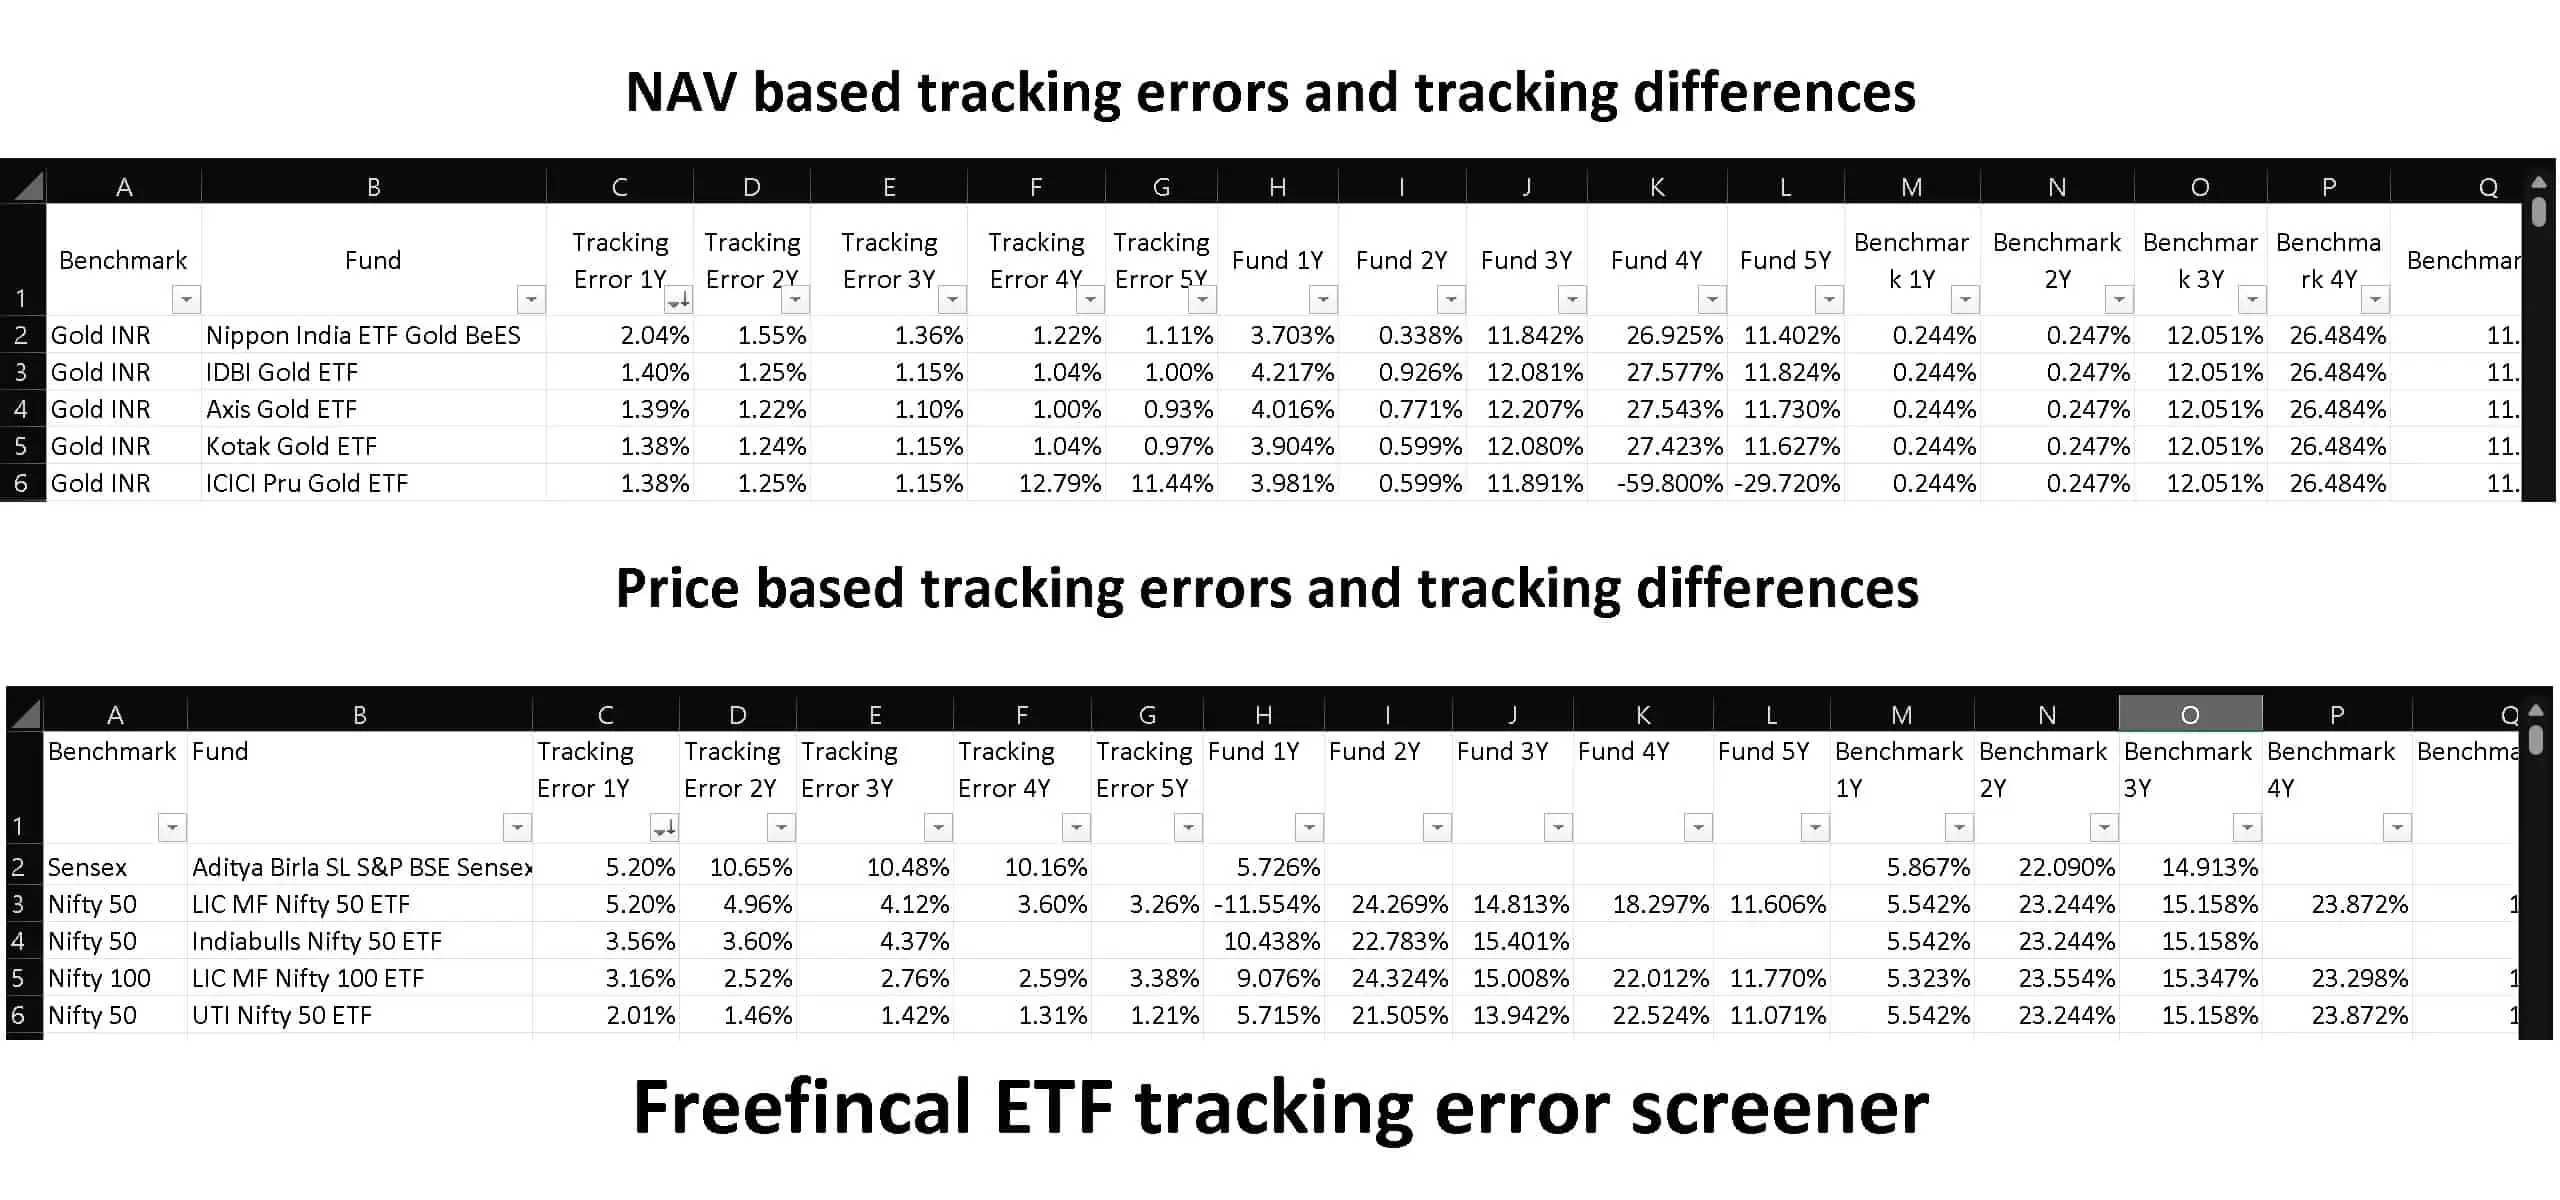 Screenshot of the freefincal ETF tracking error screener